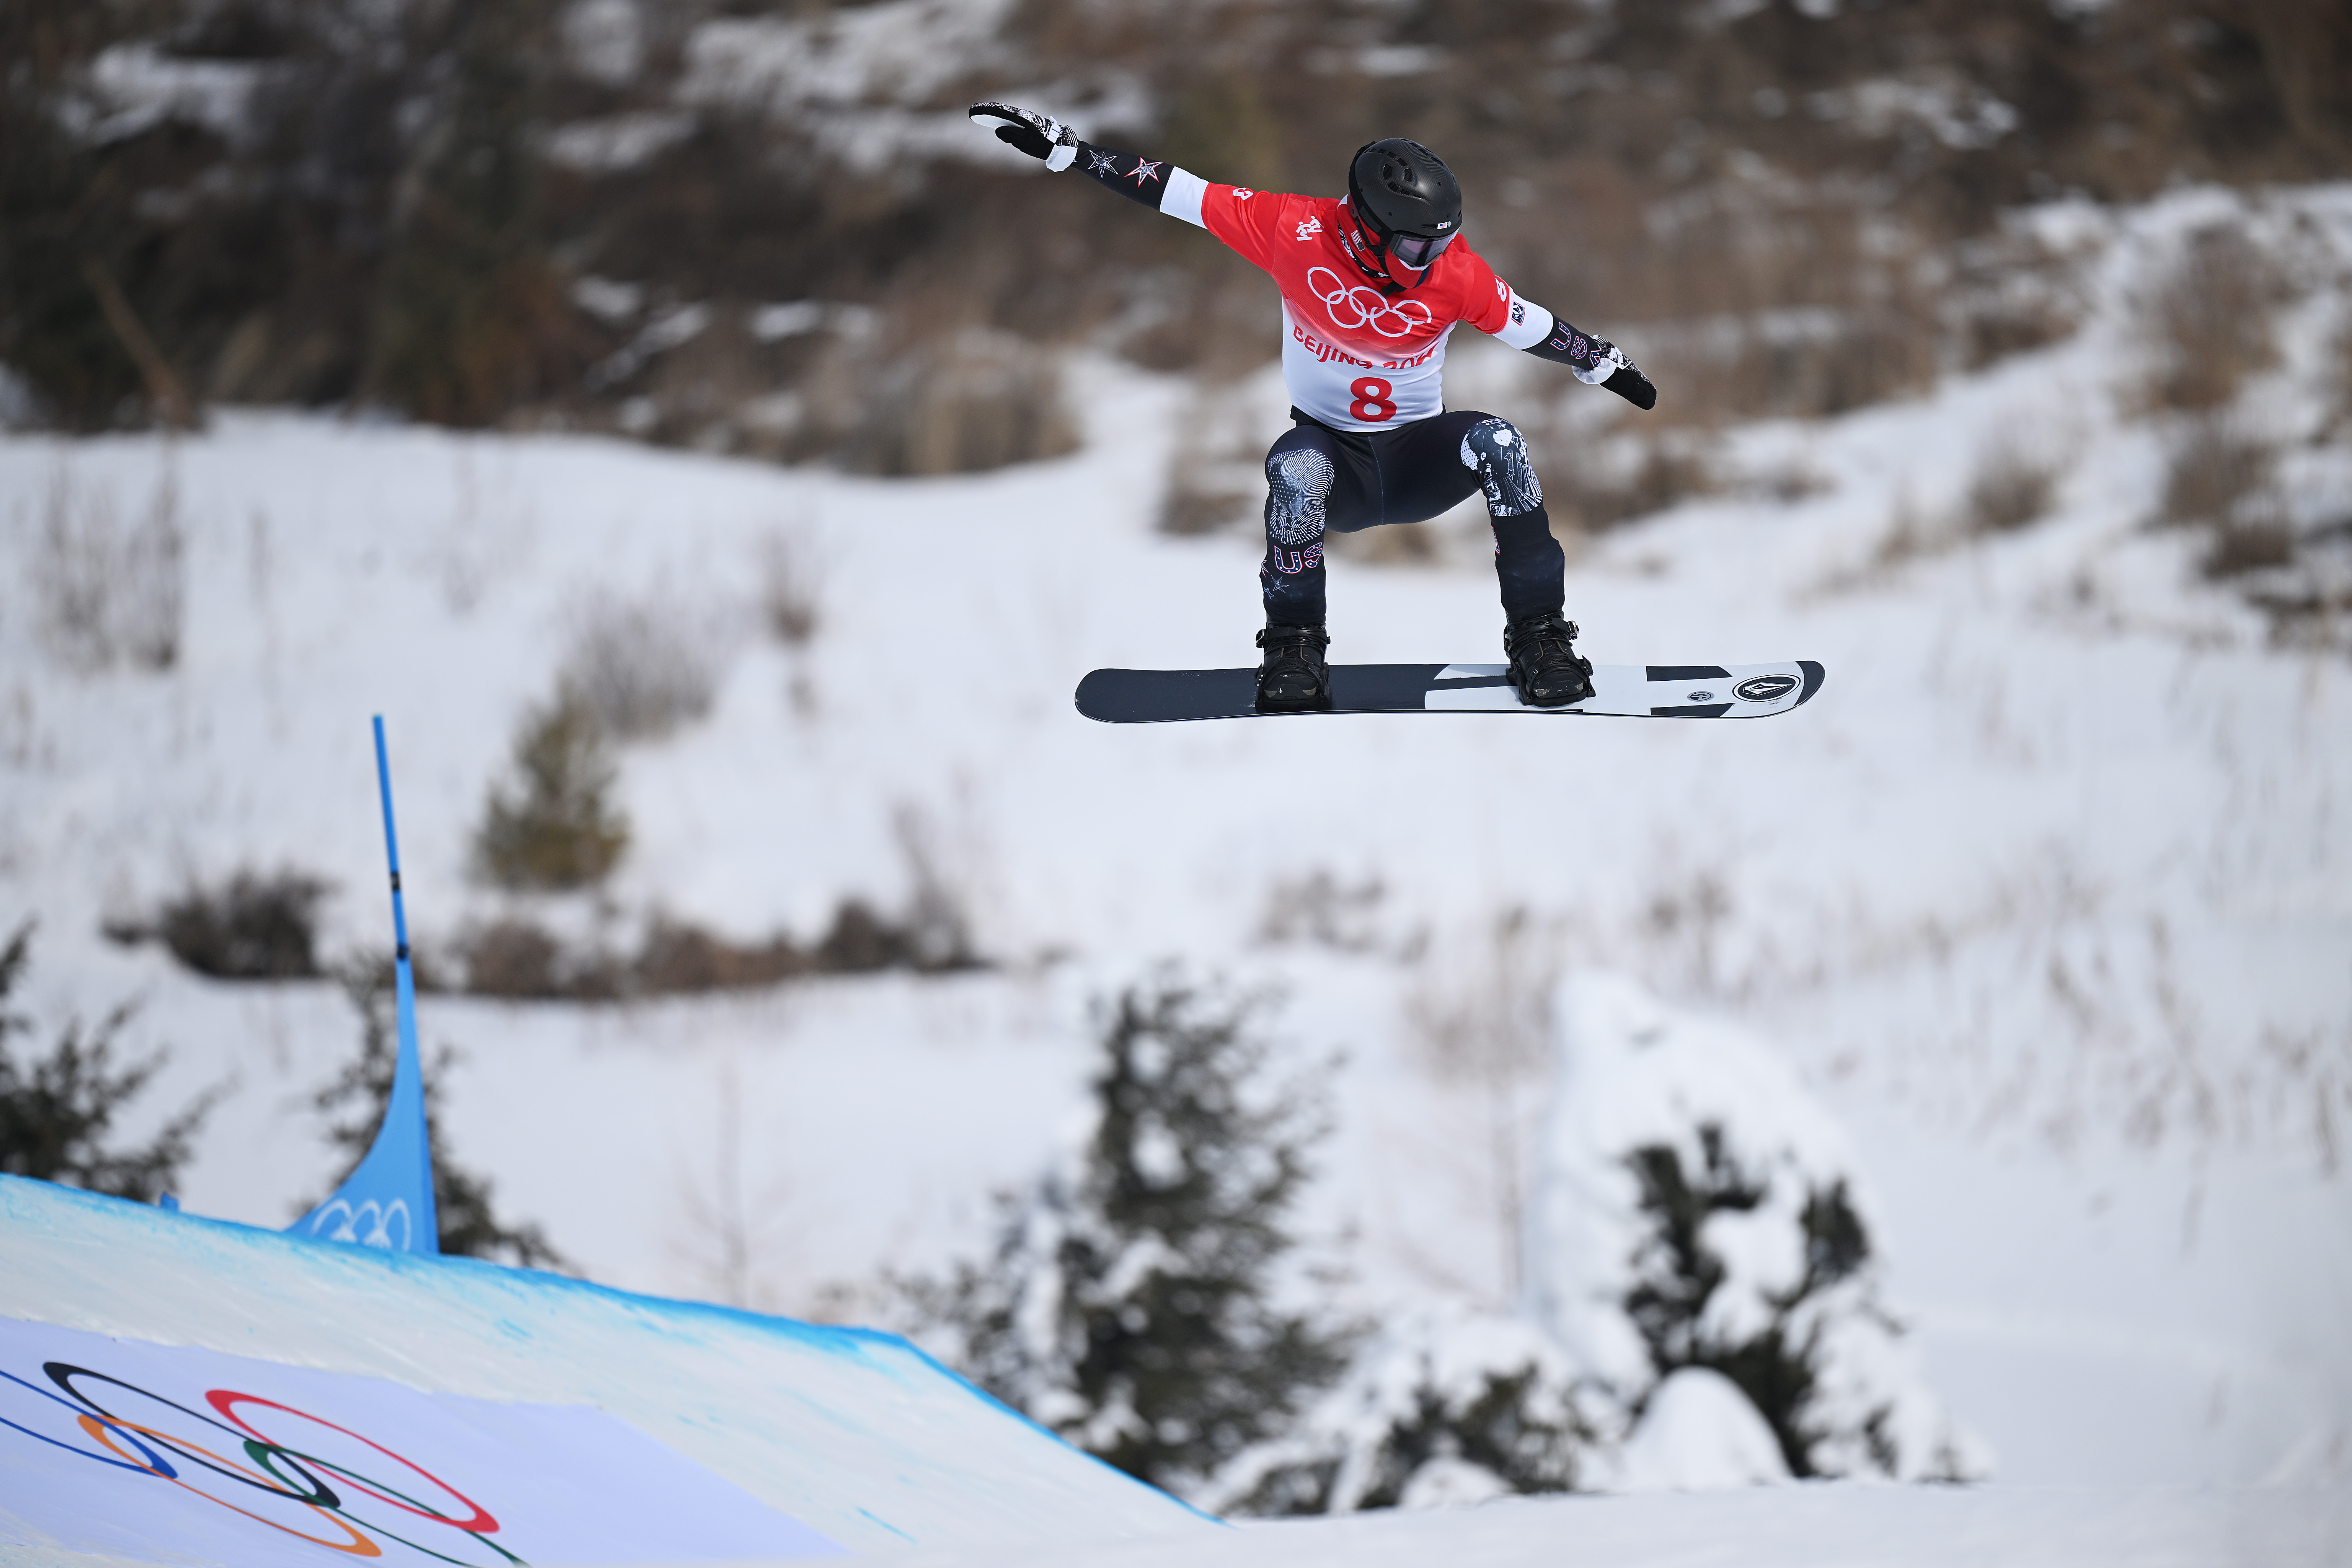 2022 Winter Olympics Buffalos Hagen Kearney starts strong in snowboard cross but fails to medal